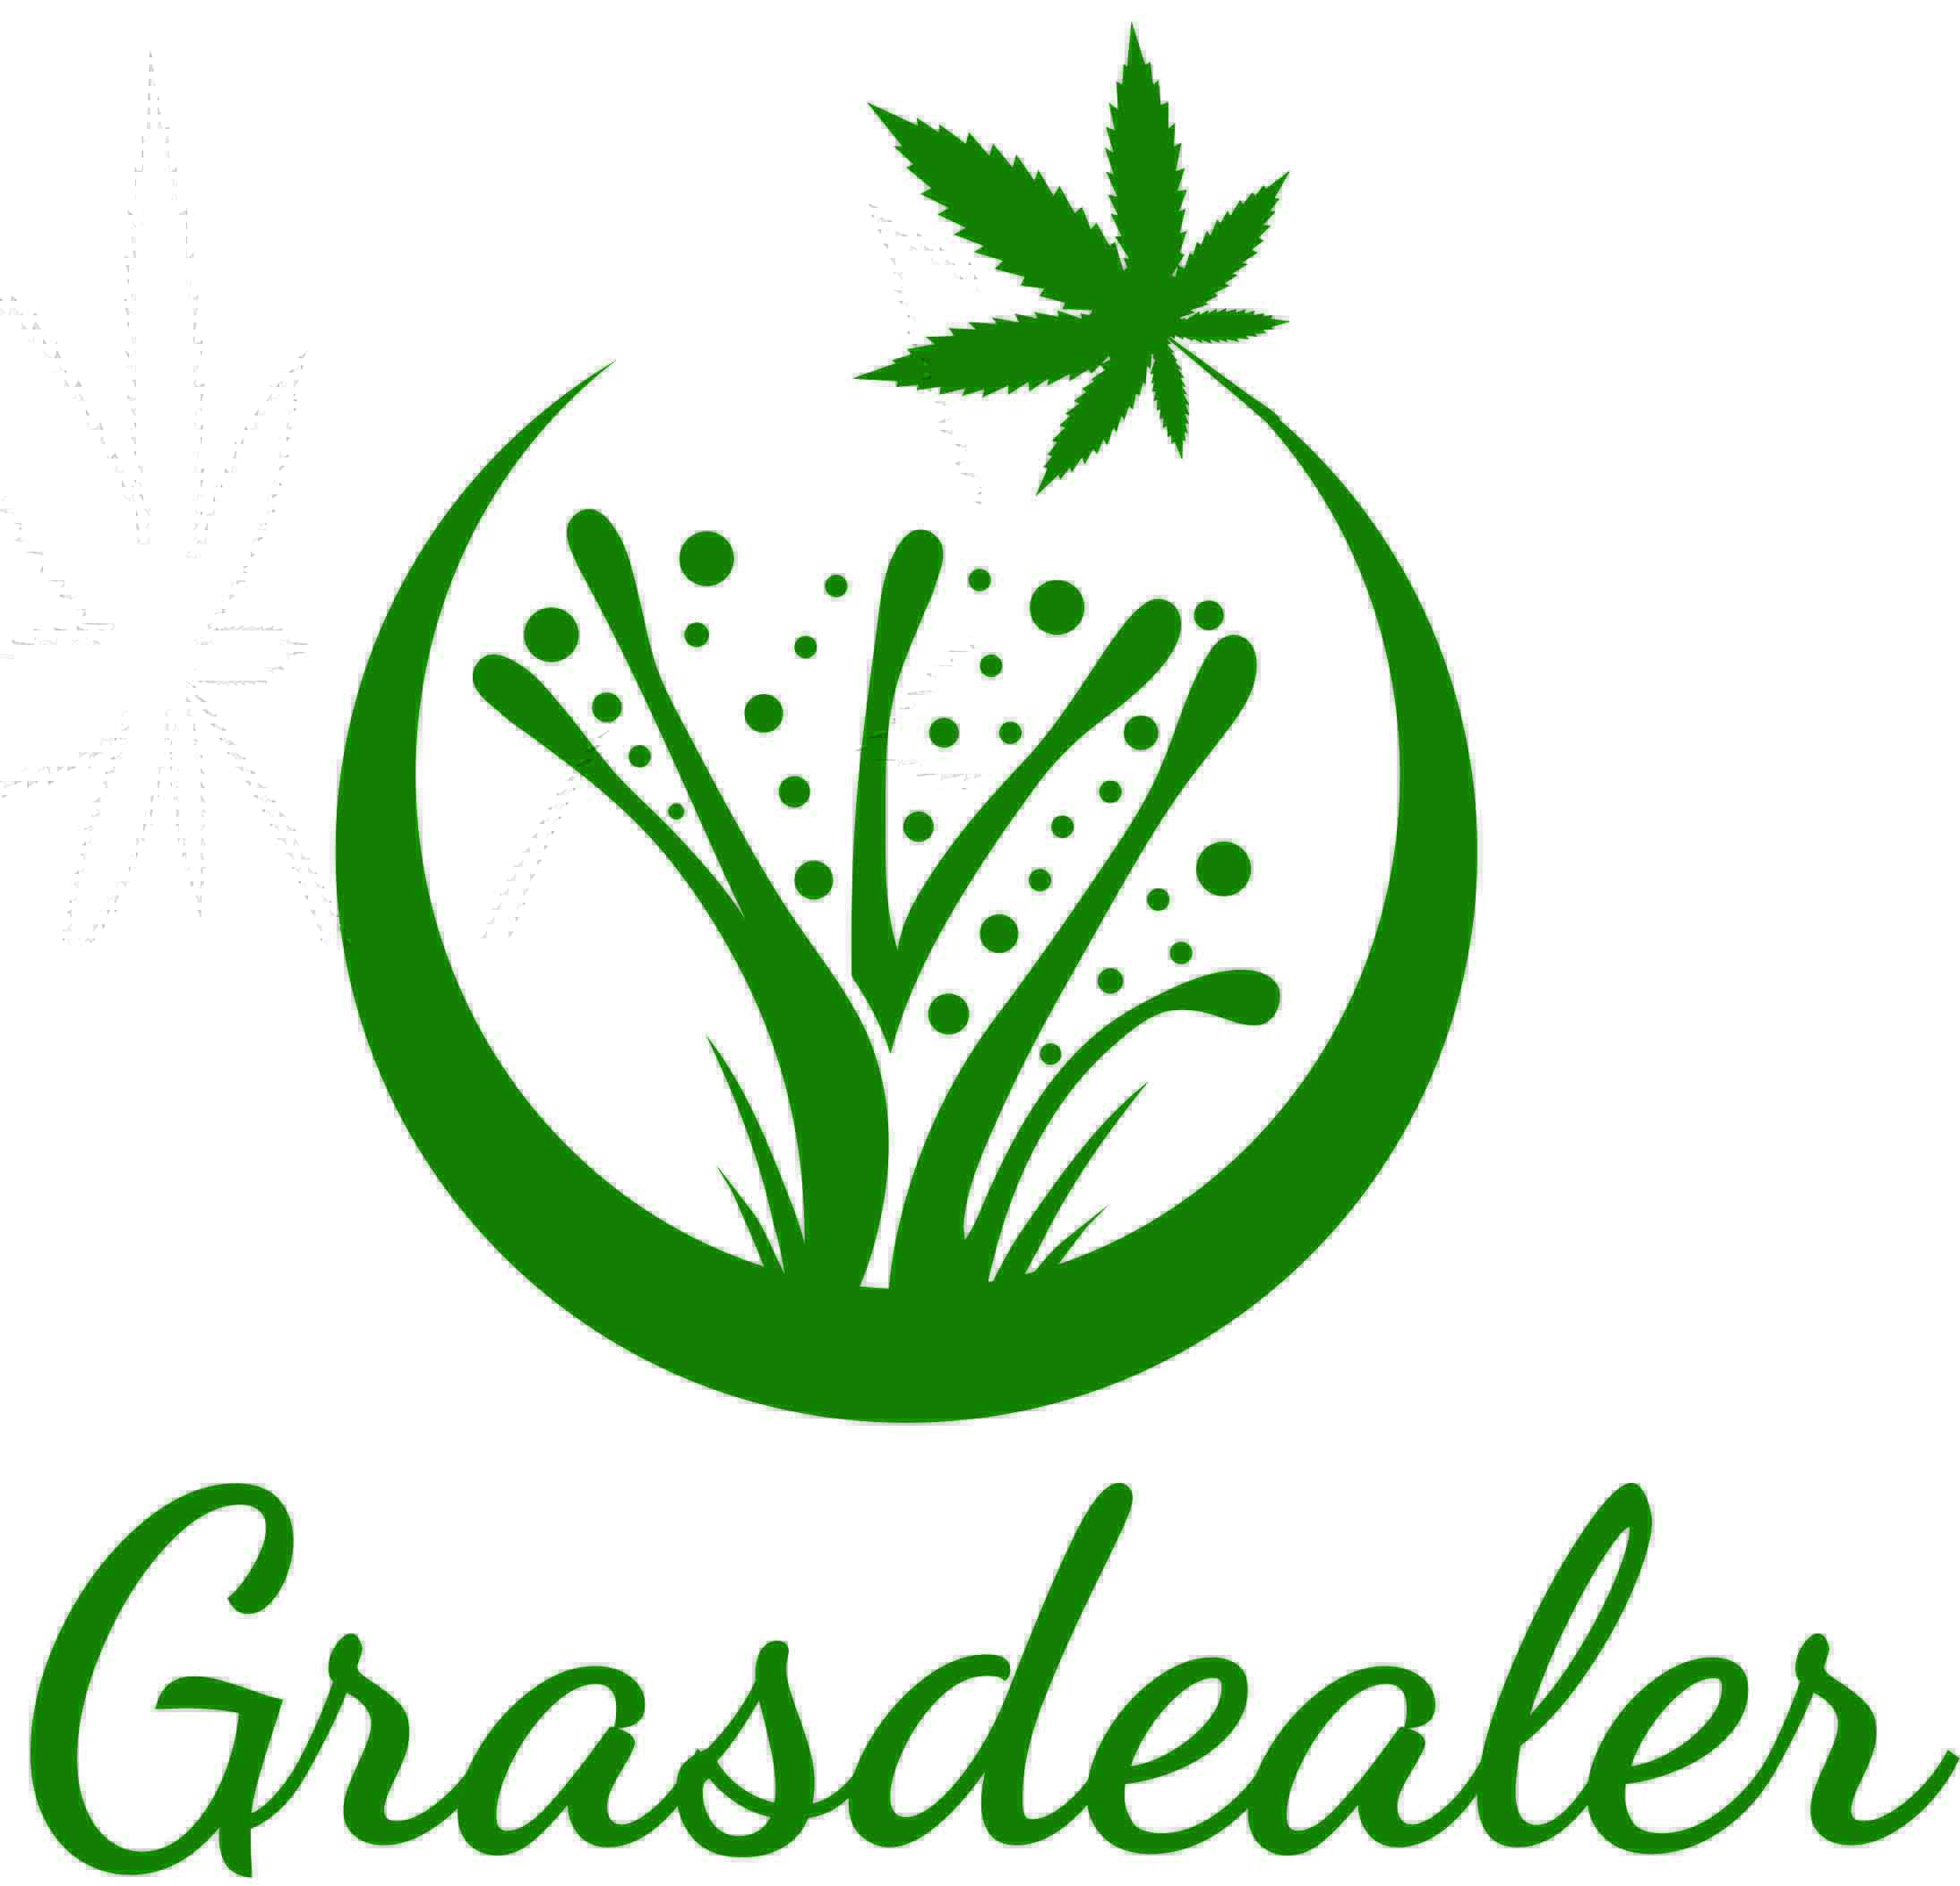 Logo "Grasdealer" von Sophia Kröhner